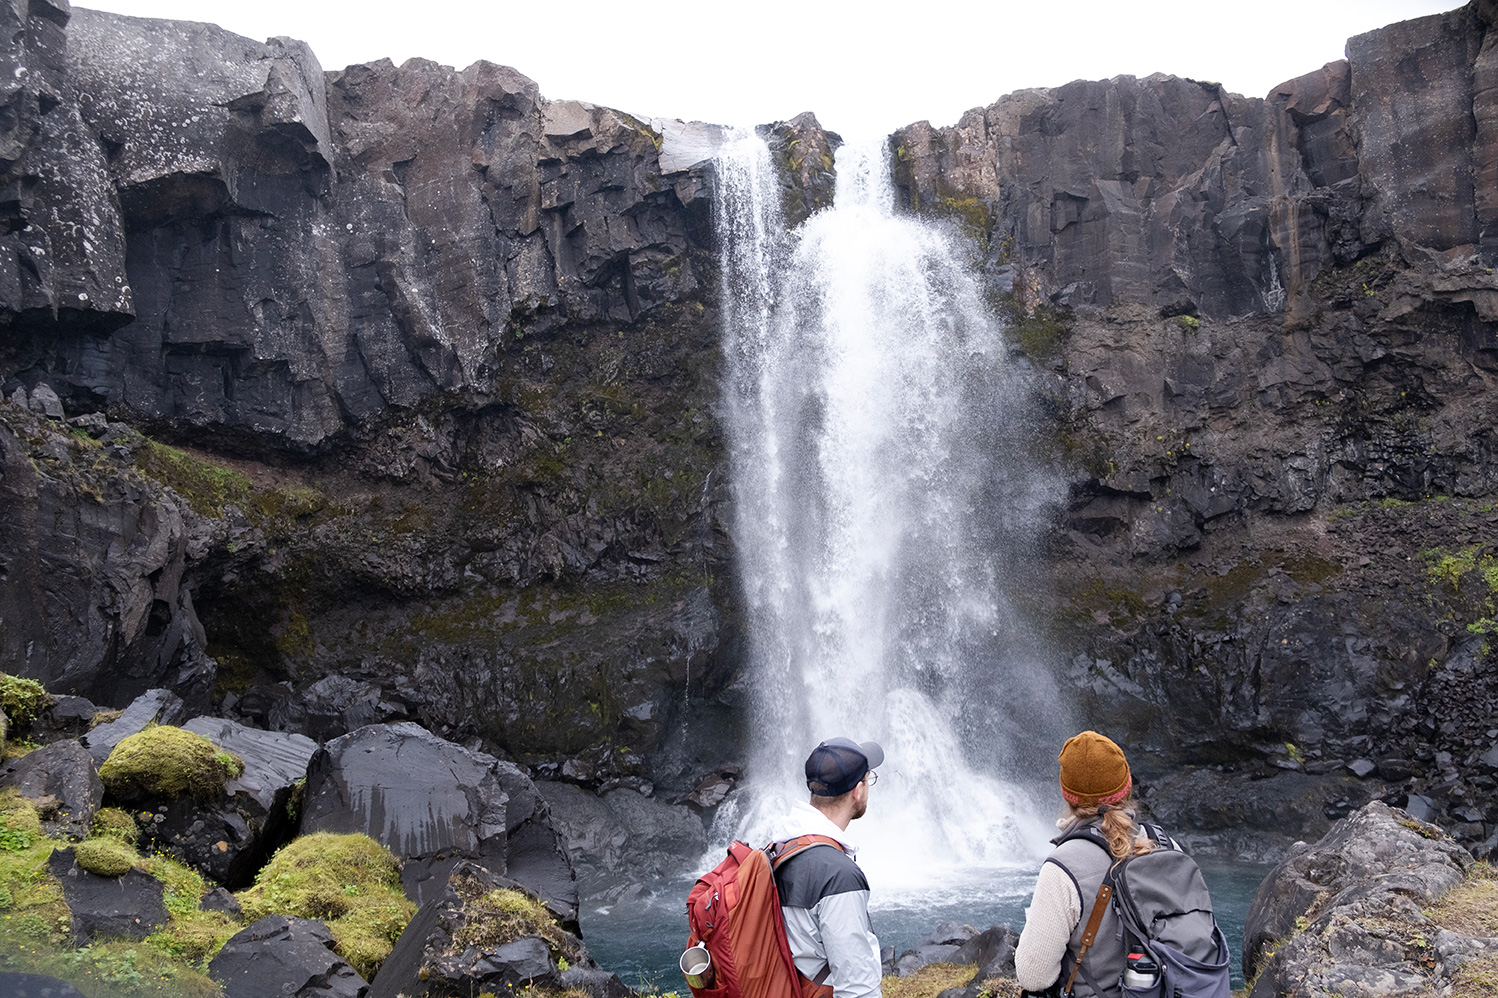 Hikers admiring the beautiful Gufufoss waterfall